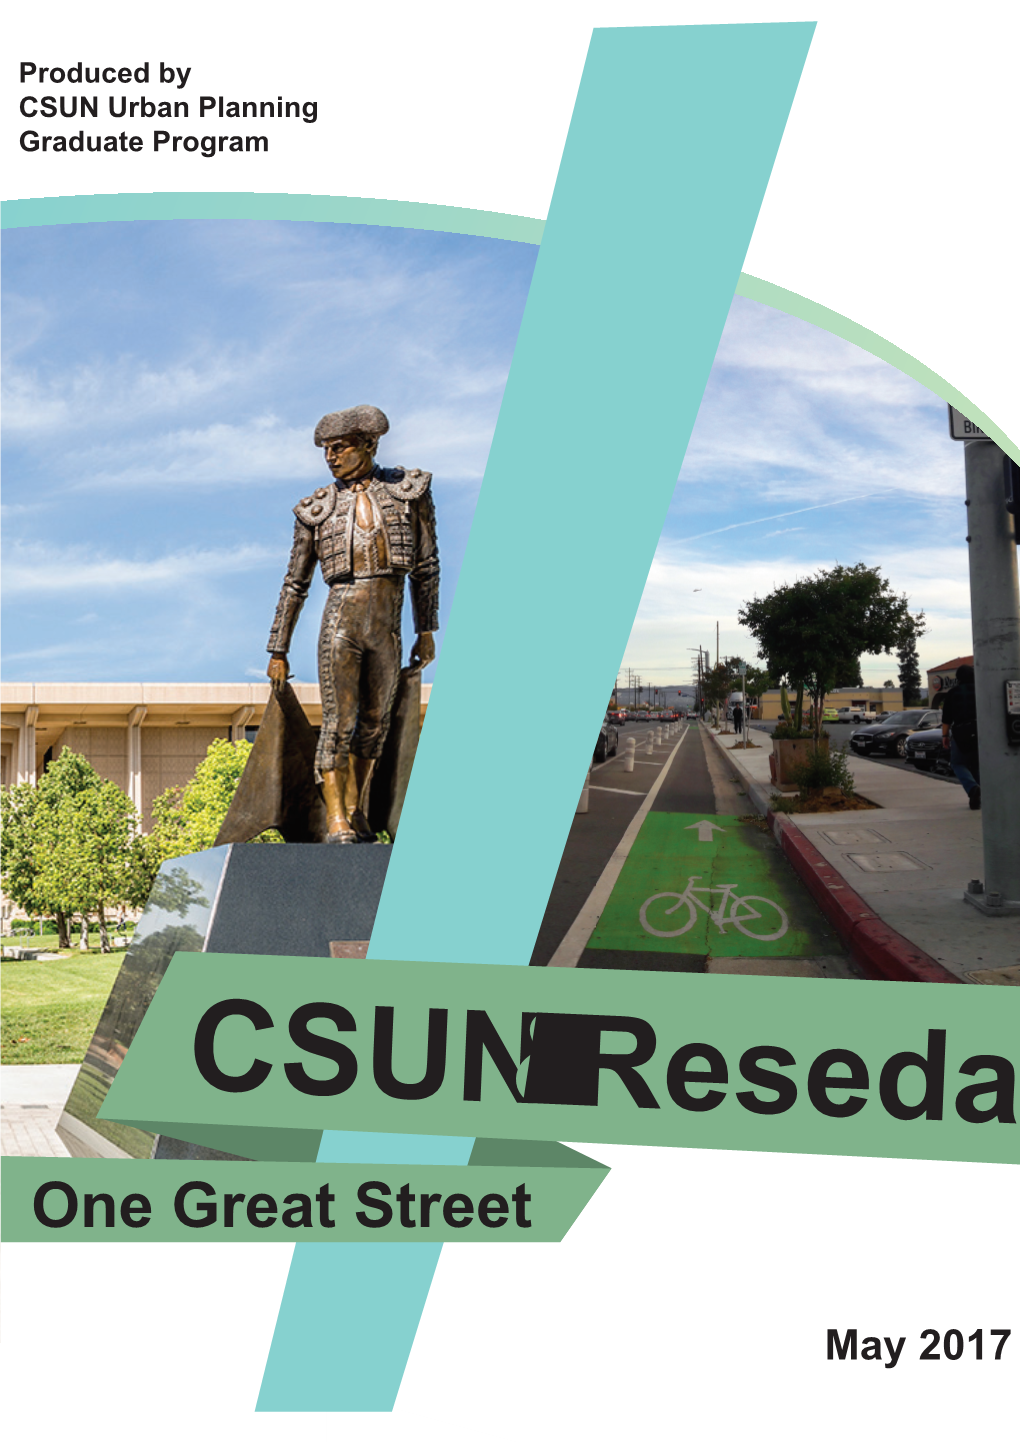 CSUN & Reseda: One Great Street